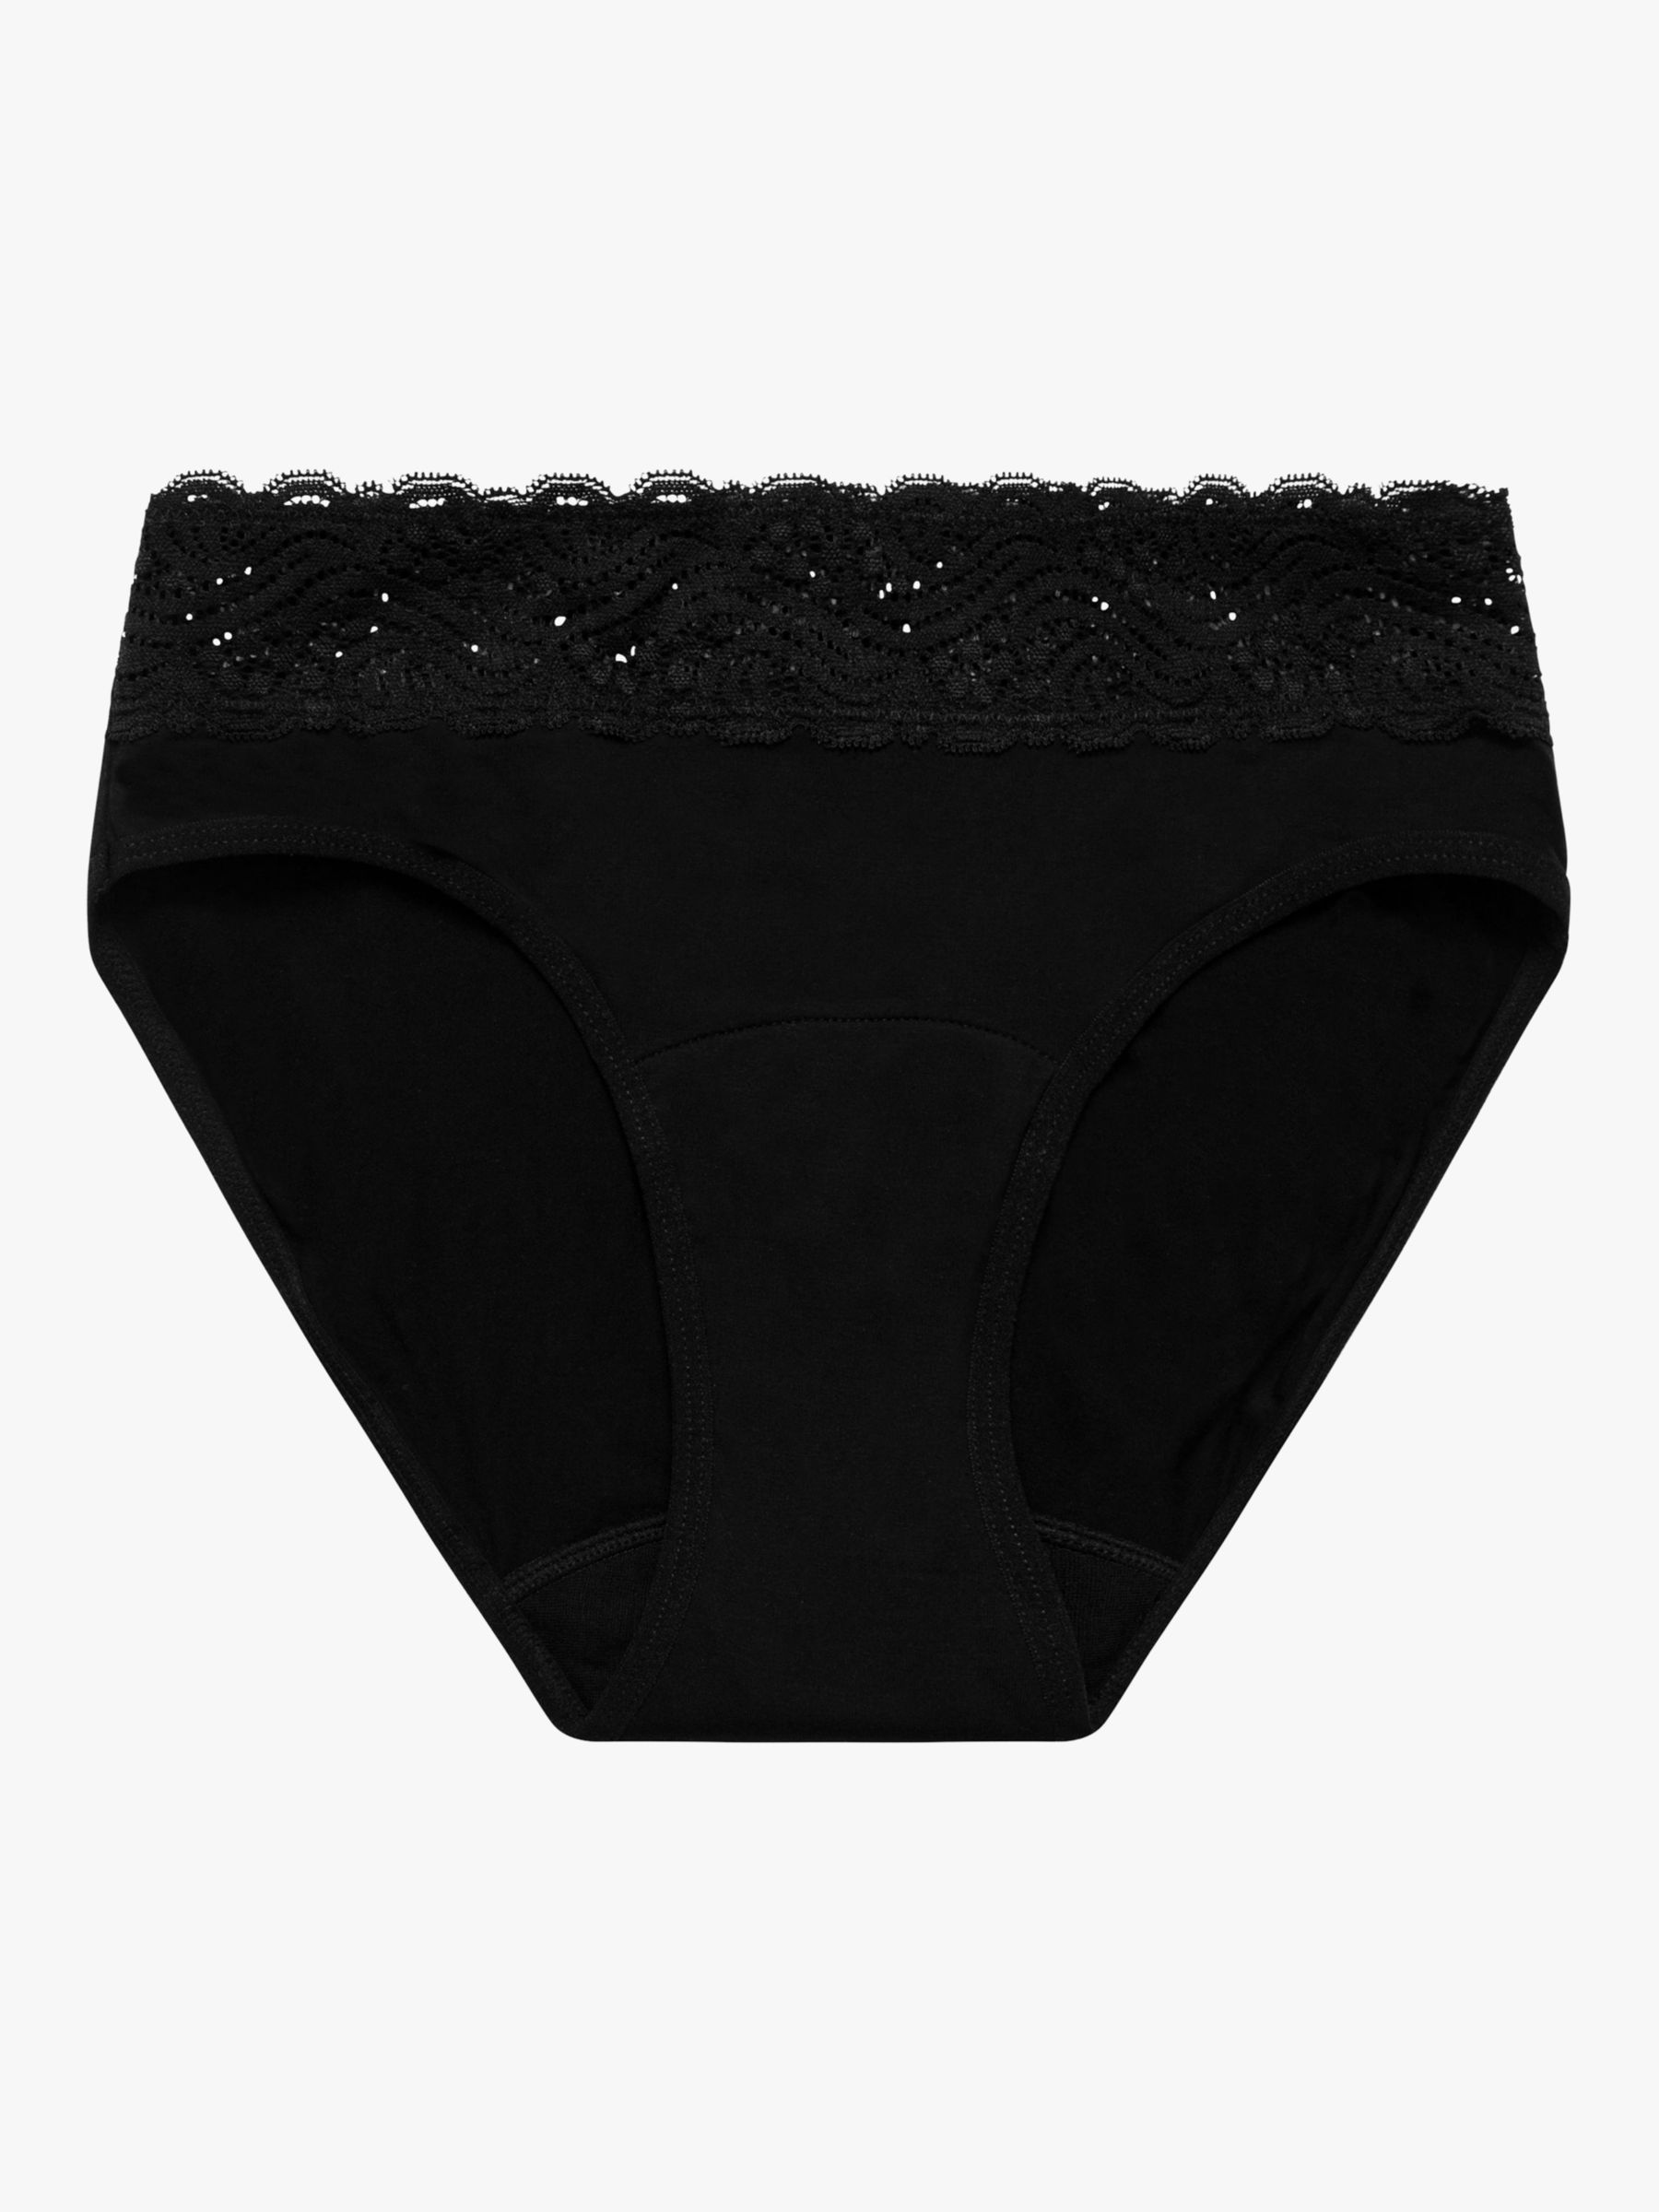 Buy Modibodi Sensual High Waist Bikini Light to Moderate Absorbency Knickers Online at johnlewis.com